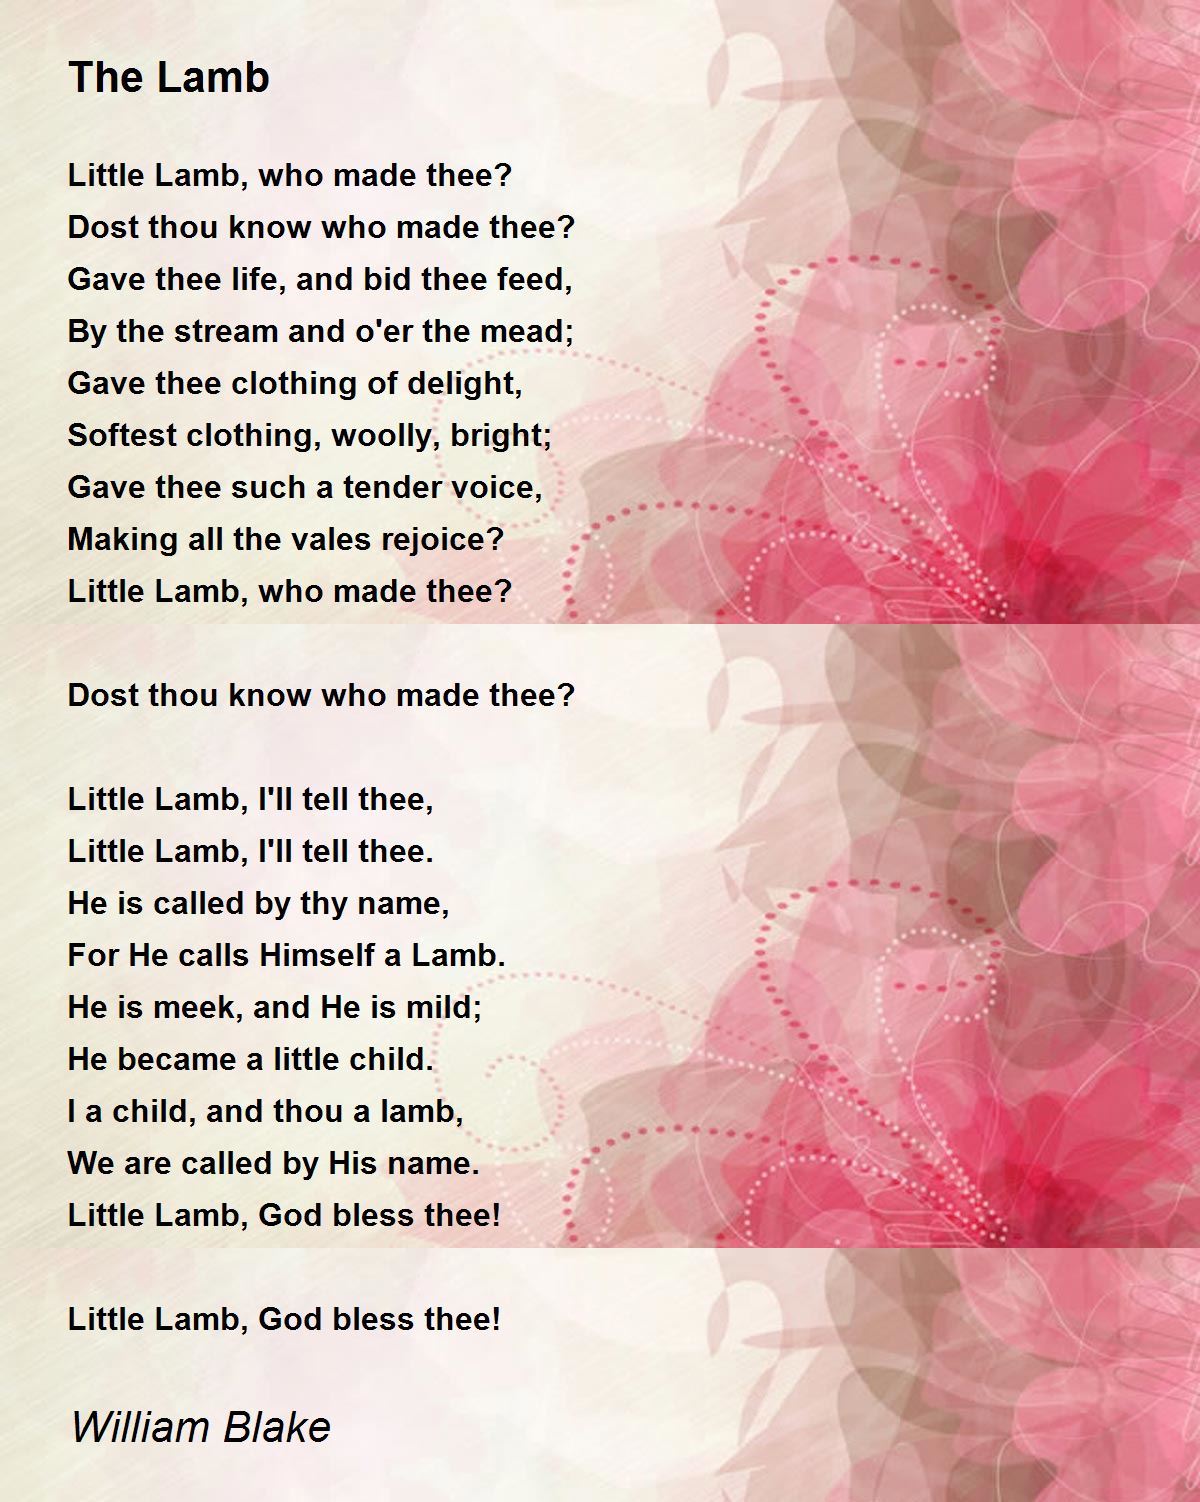 The Lamb - The Lamb Poem by William Blake